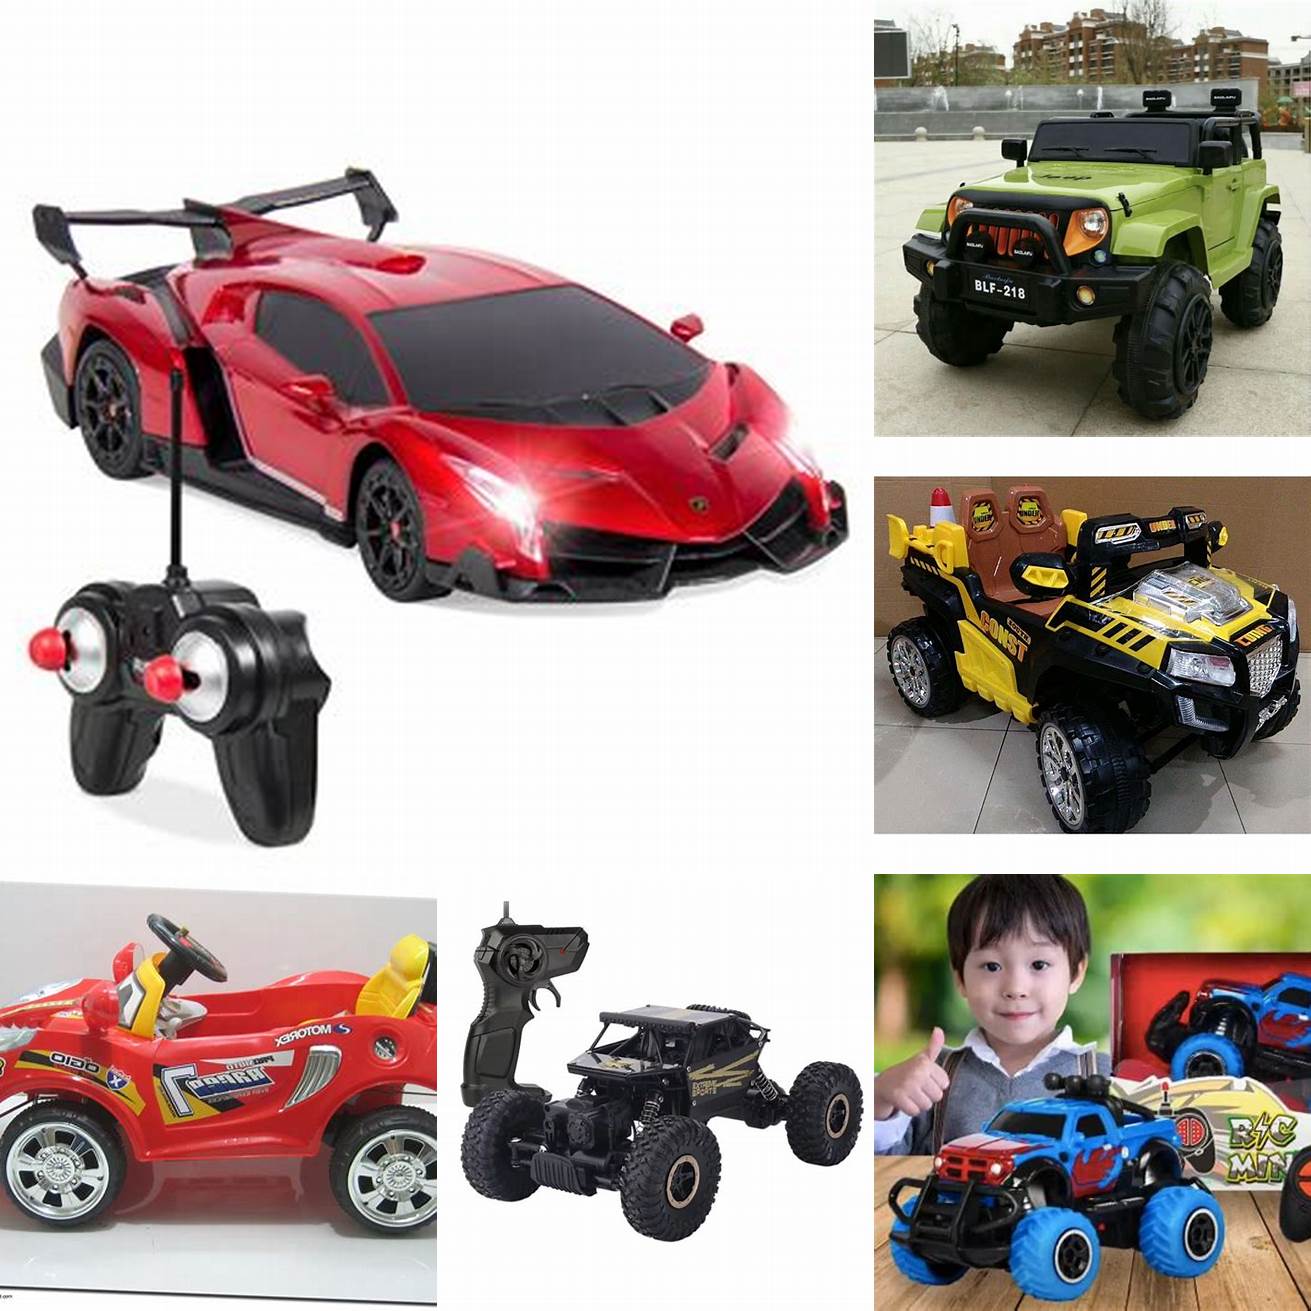 Pilih mobil remot yang sesuai dengan usia anak Anda